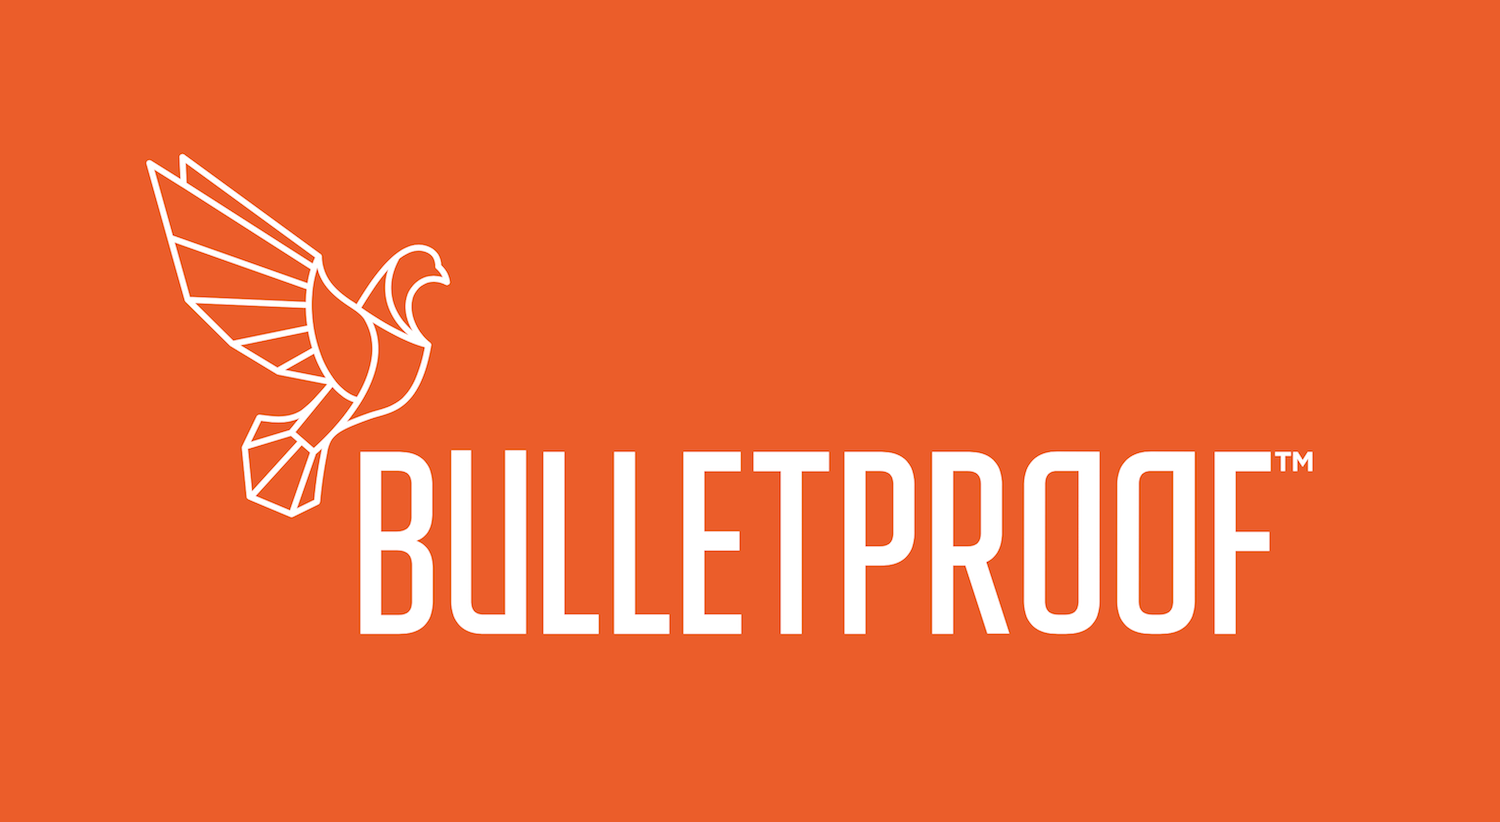 Blog.com Logo - The Bulletproof Blog the State of High Performance